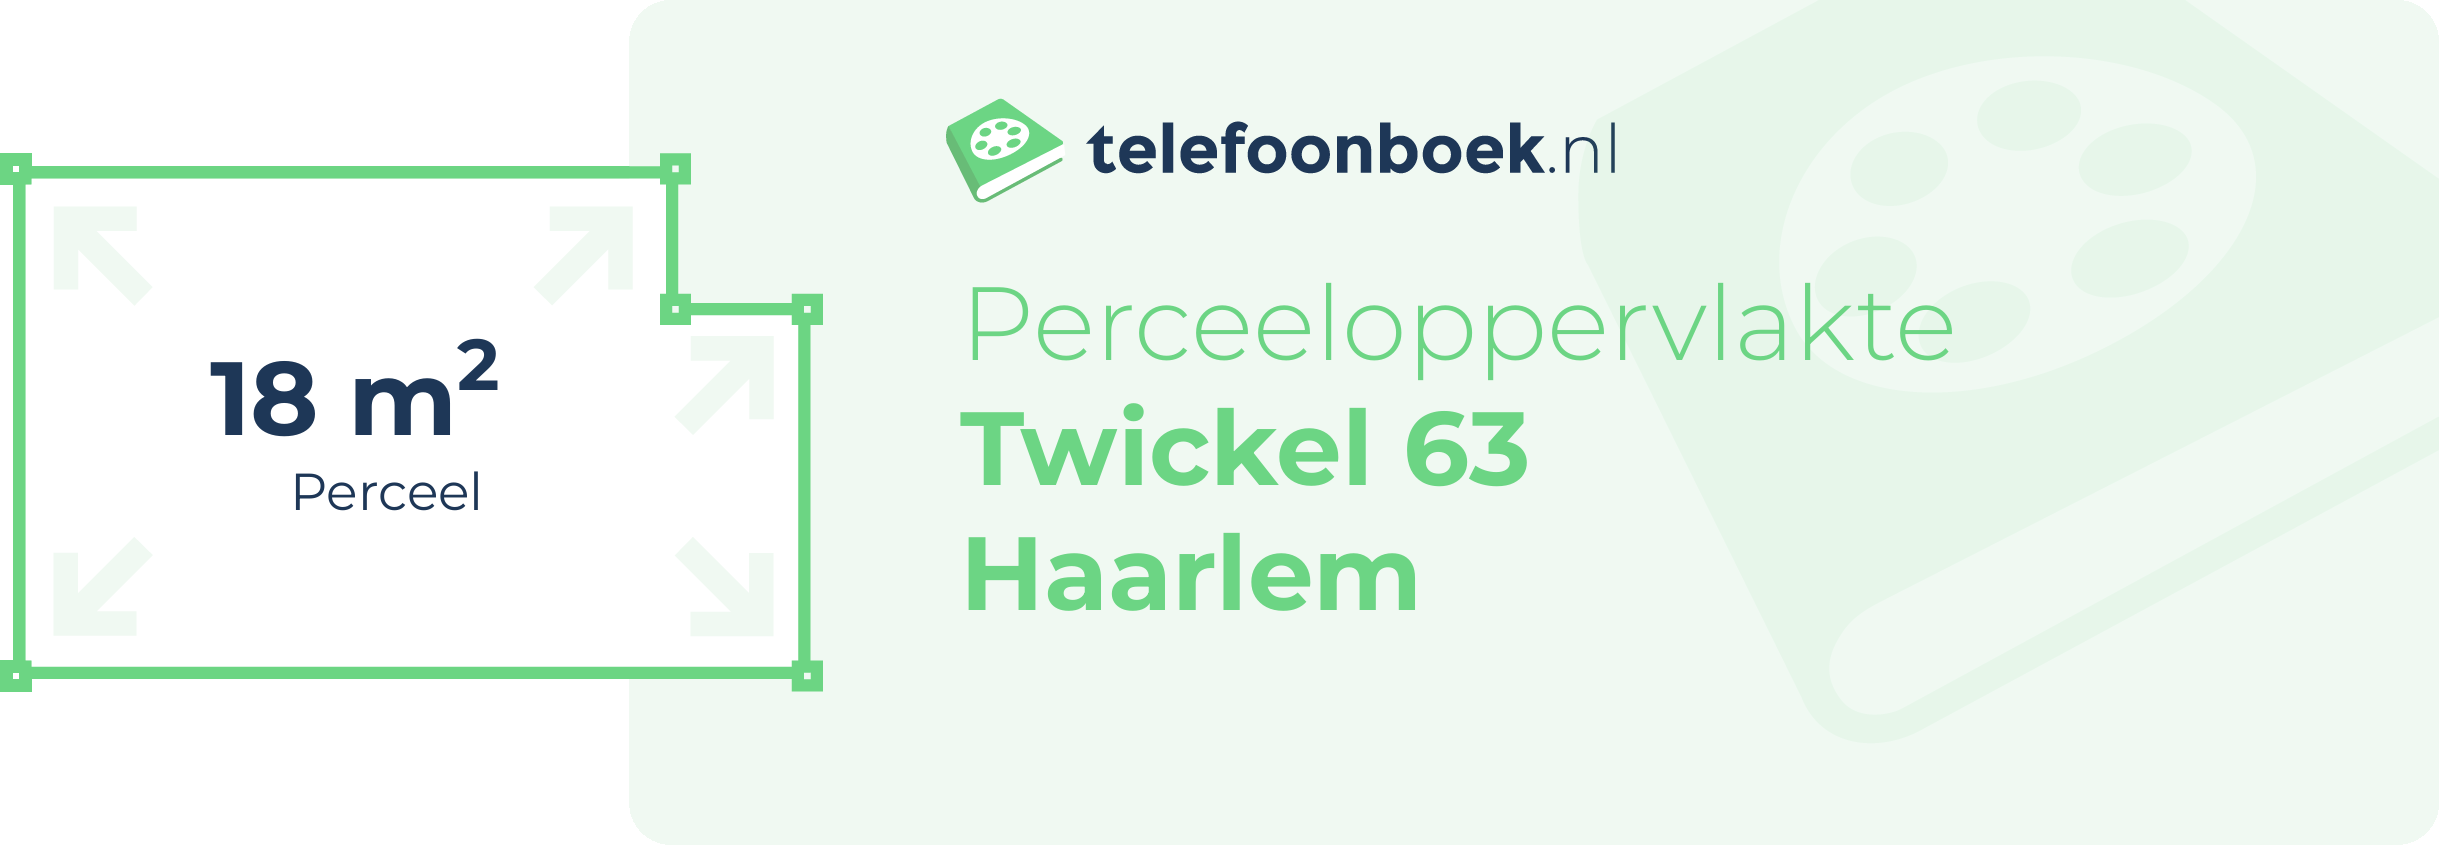 Perceeloppervlakte Twickel 63 Haarlem